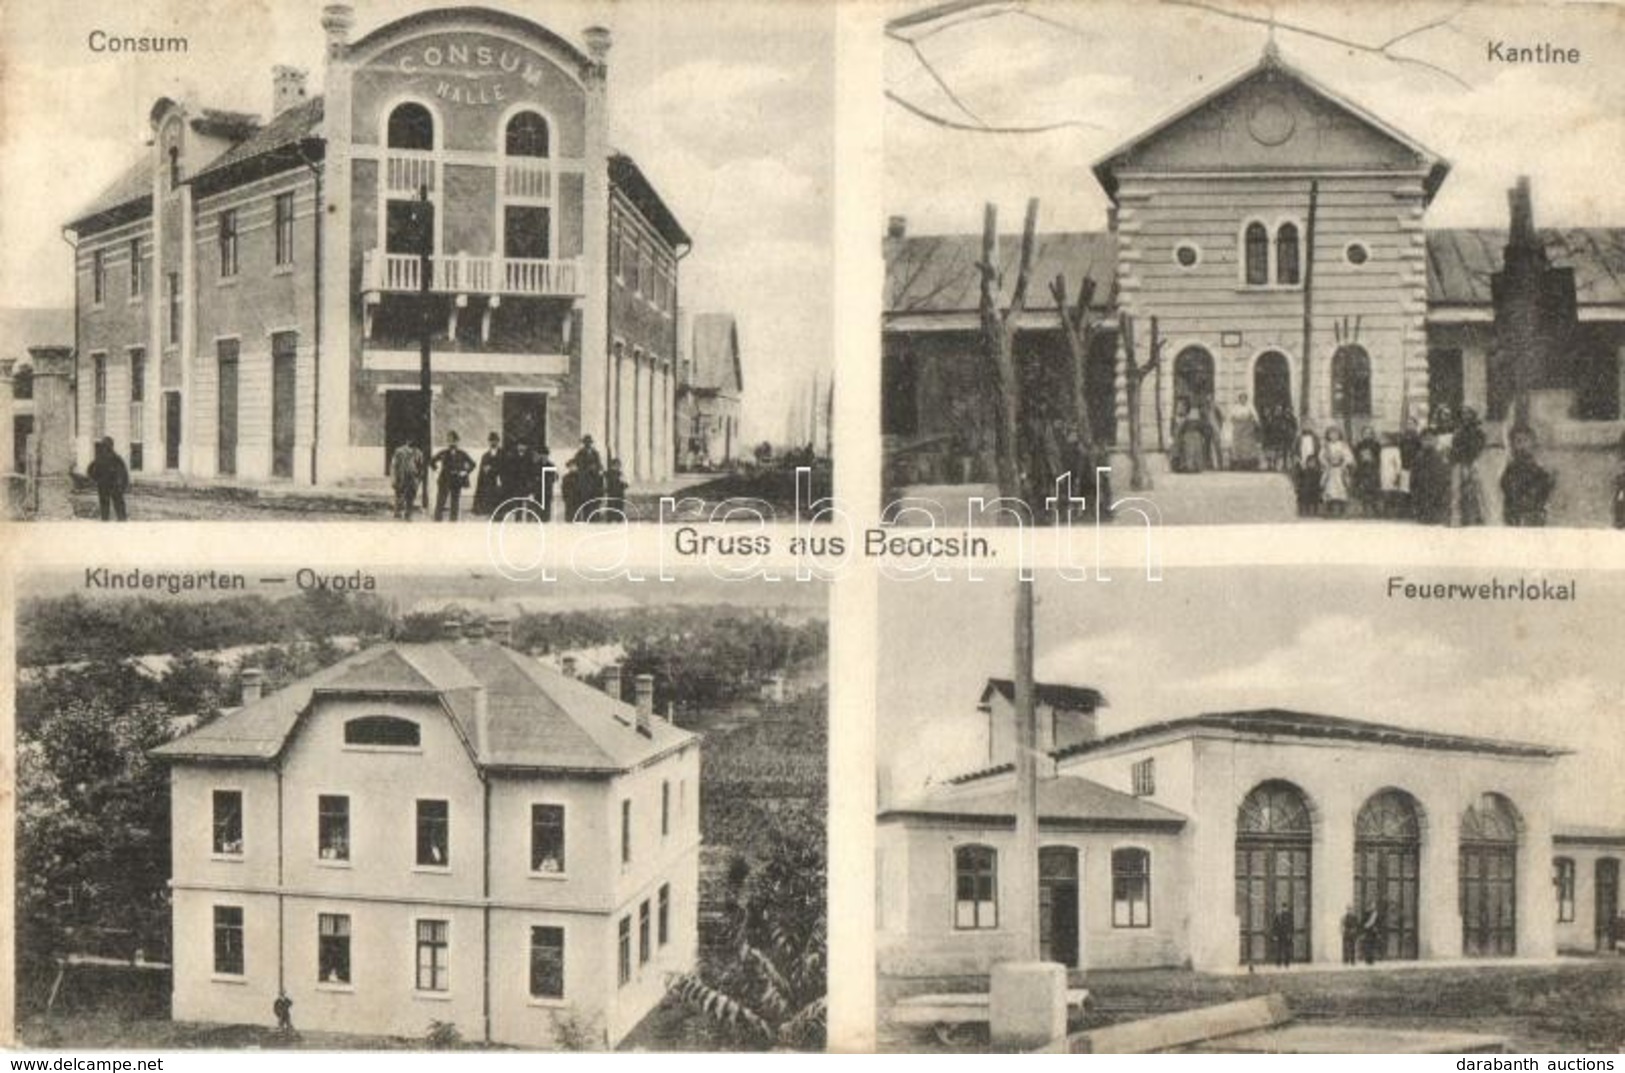 T2 1914 Belcsény, Beocsin, Beocin; Consum Halle, Katnine, Kindergarten, Feuerwehrlokal / áruház, Kantin, étterem, óvoda, - Unclassified